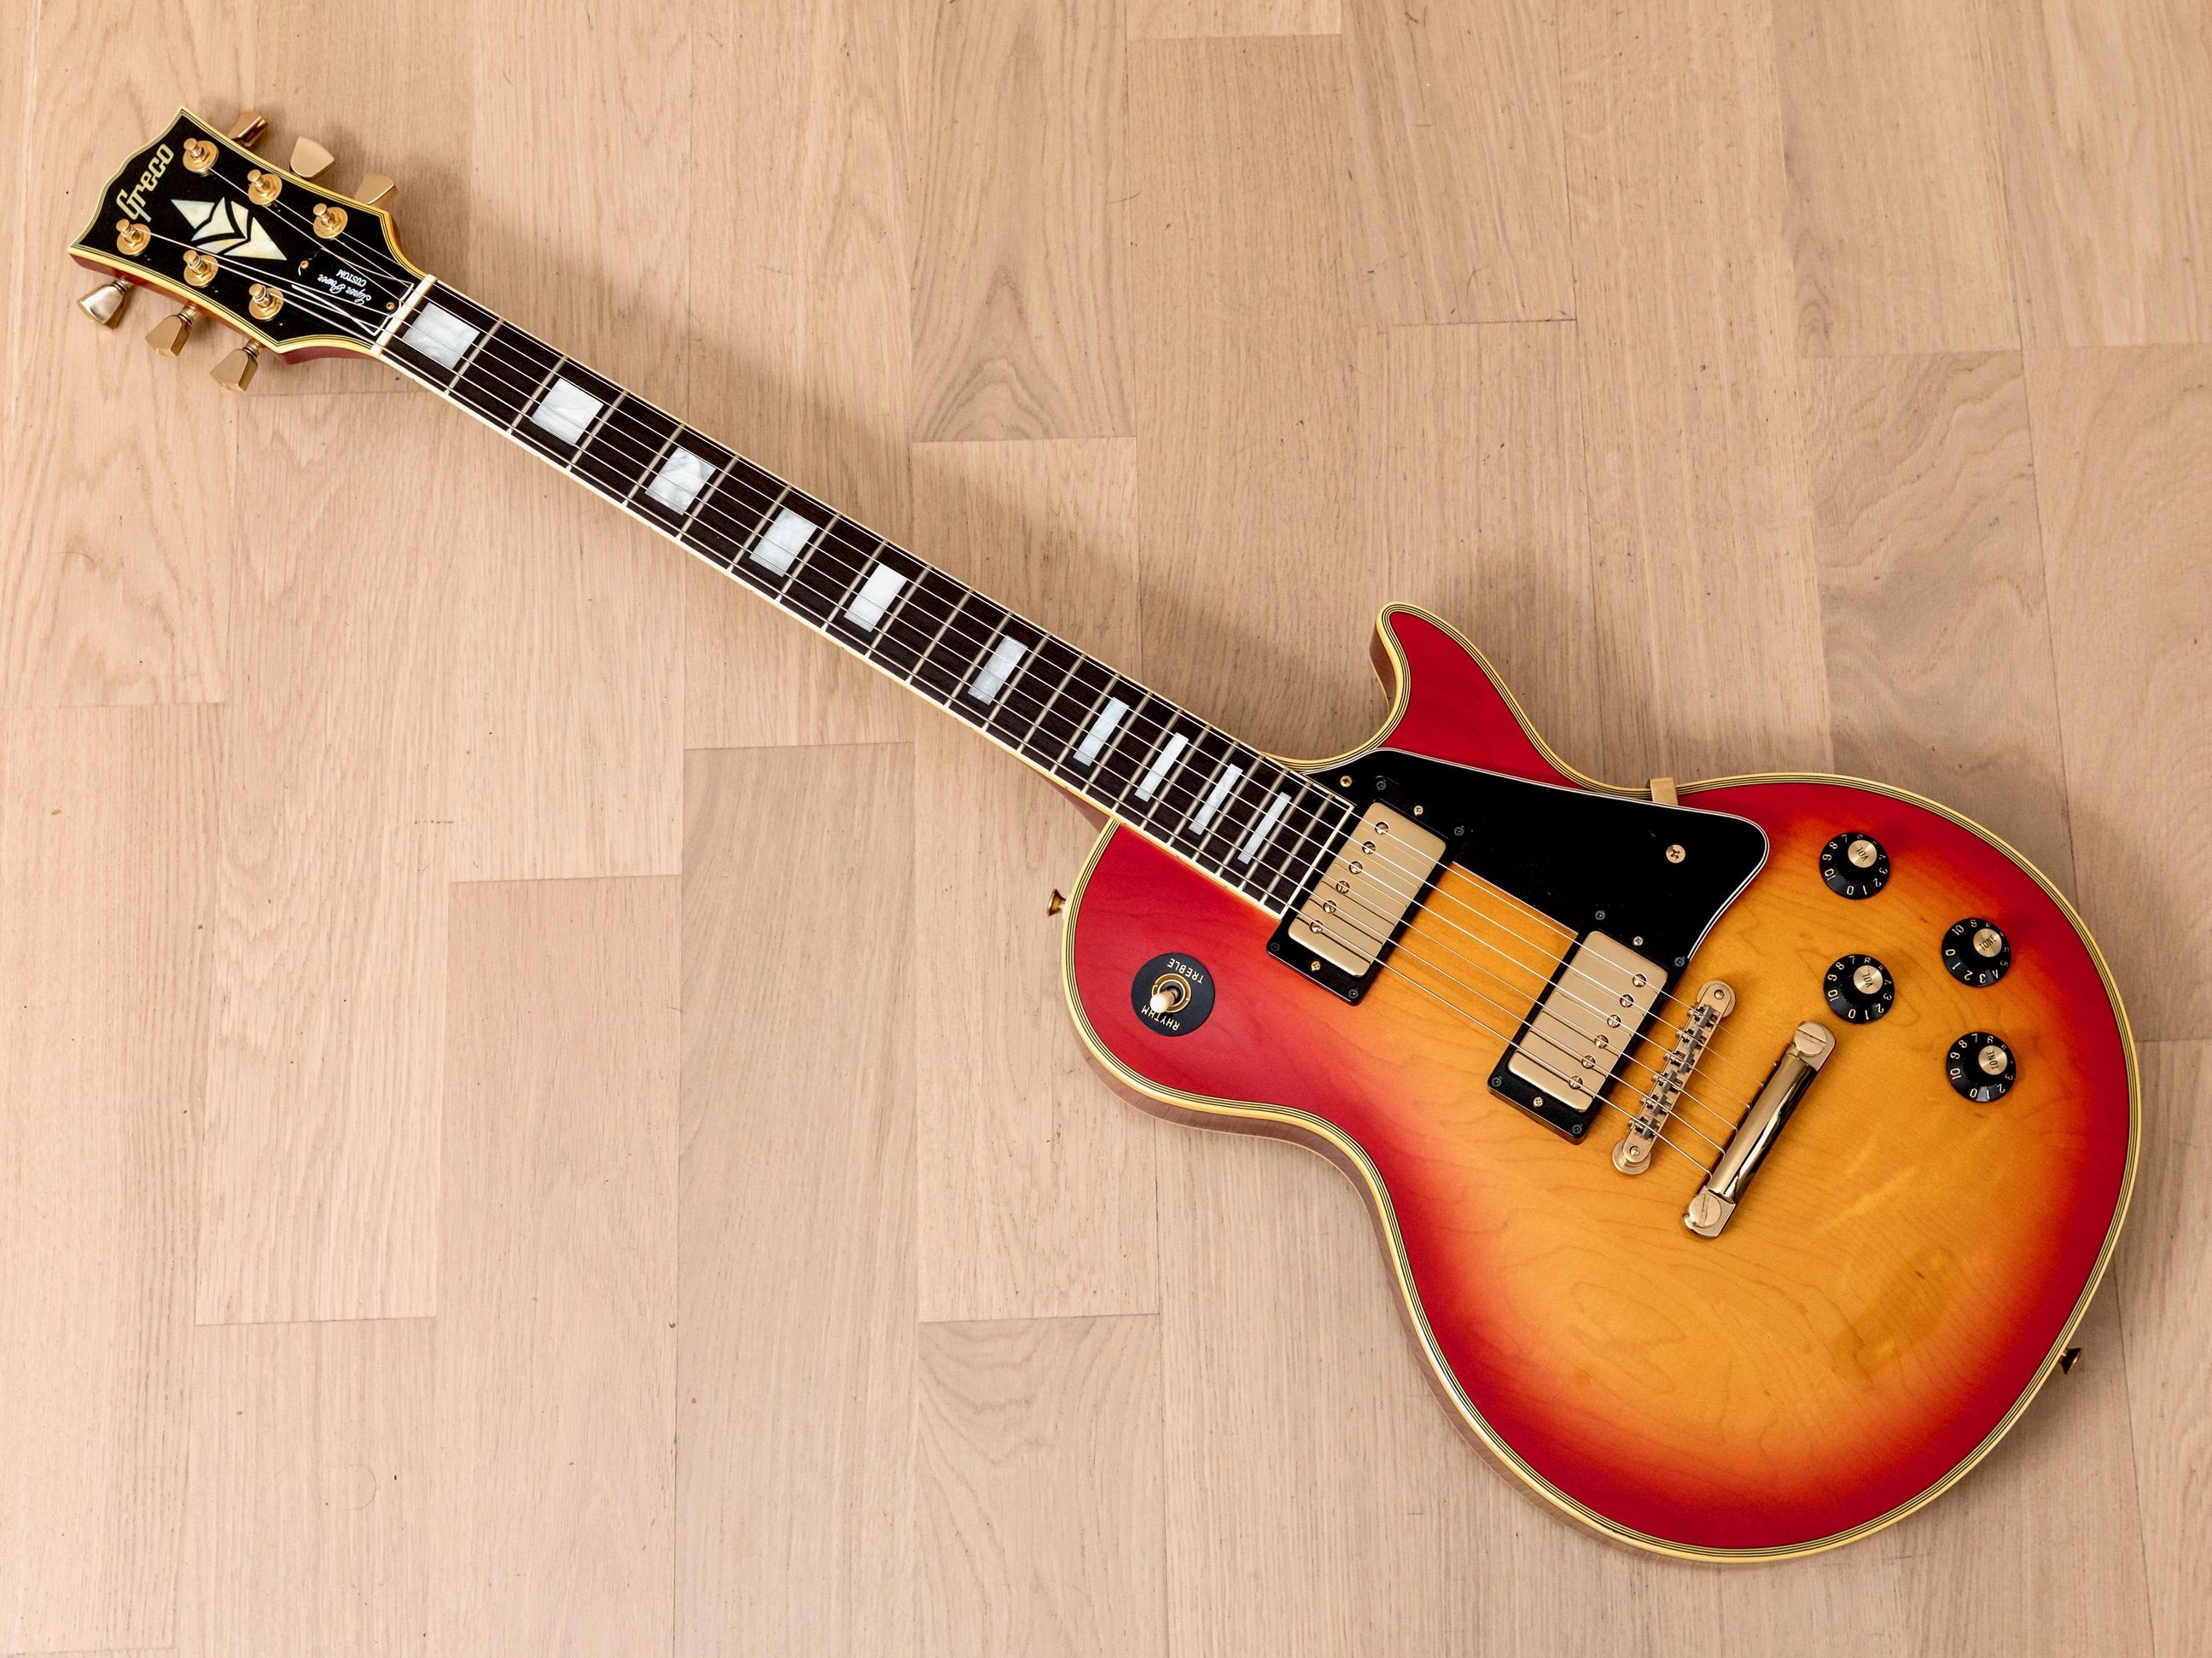 1981 Greco Super Power Custom EG500C Vintage Guitar Cherry Sunburst w/ Maxon Pickups & Case, Japan Fujigen